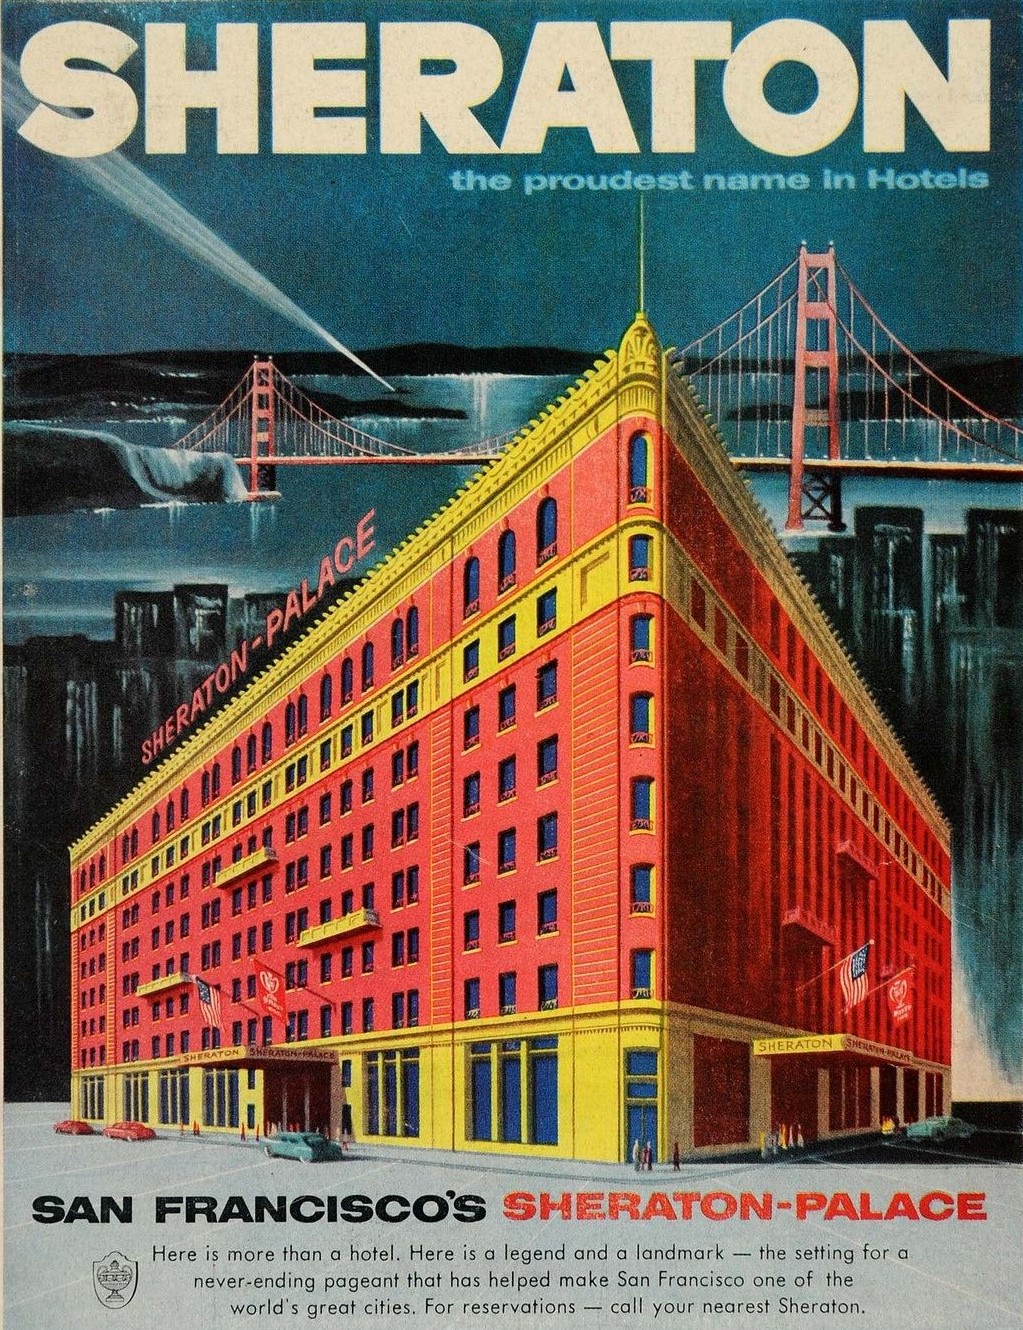 1956 - The Sheraton-Palace in San Francisco